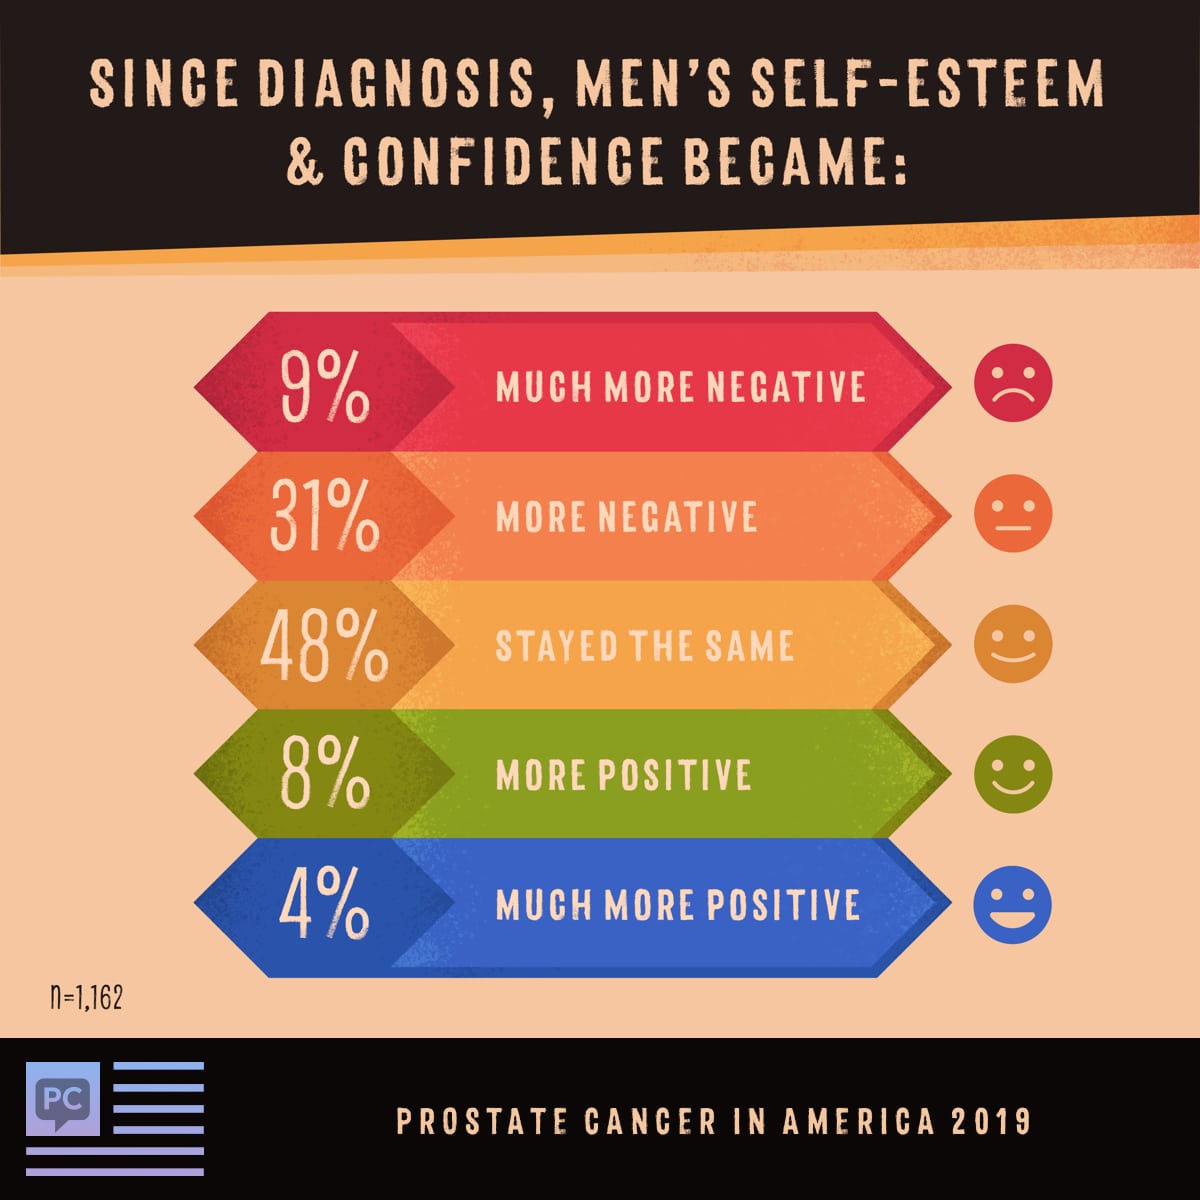 Self-esteem/confidence %: much more negative (9), more negative (31), same (48), more positive (8), much more positive (4)